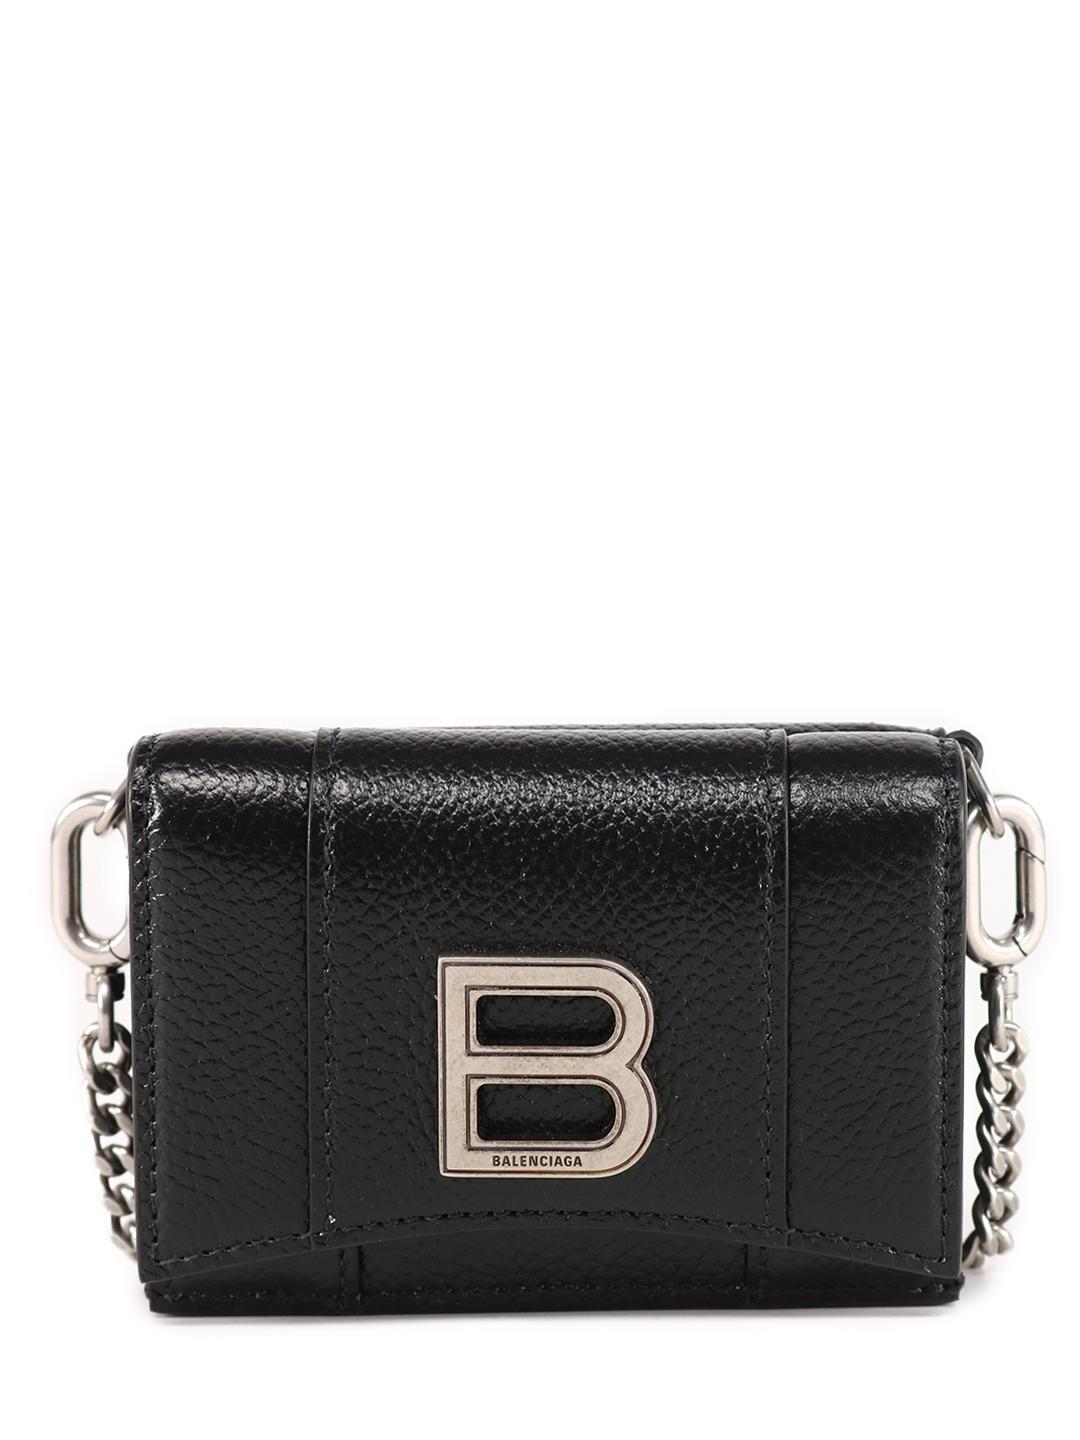 Balenciaga Hourglass Mini Chain Wallet in Black | Lyst